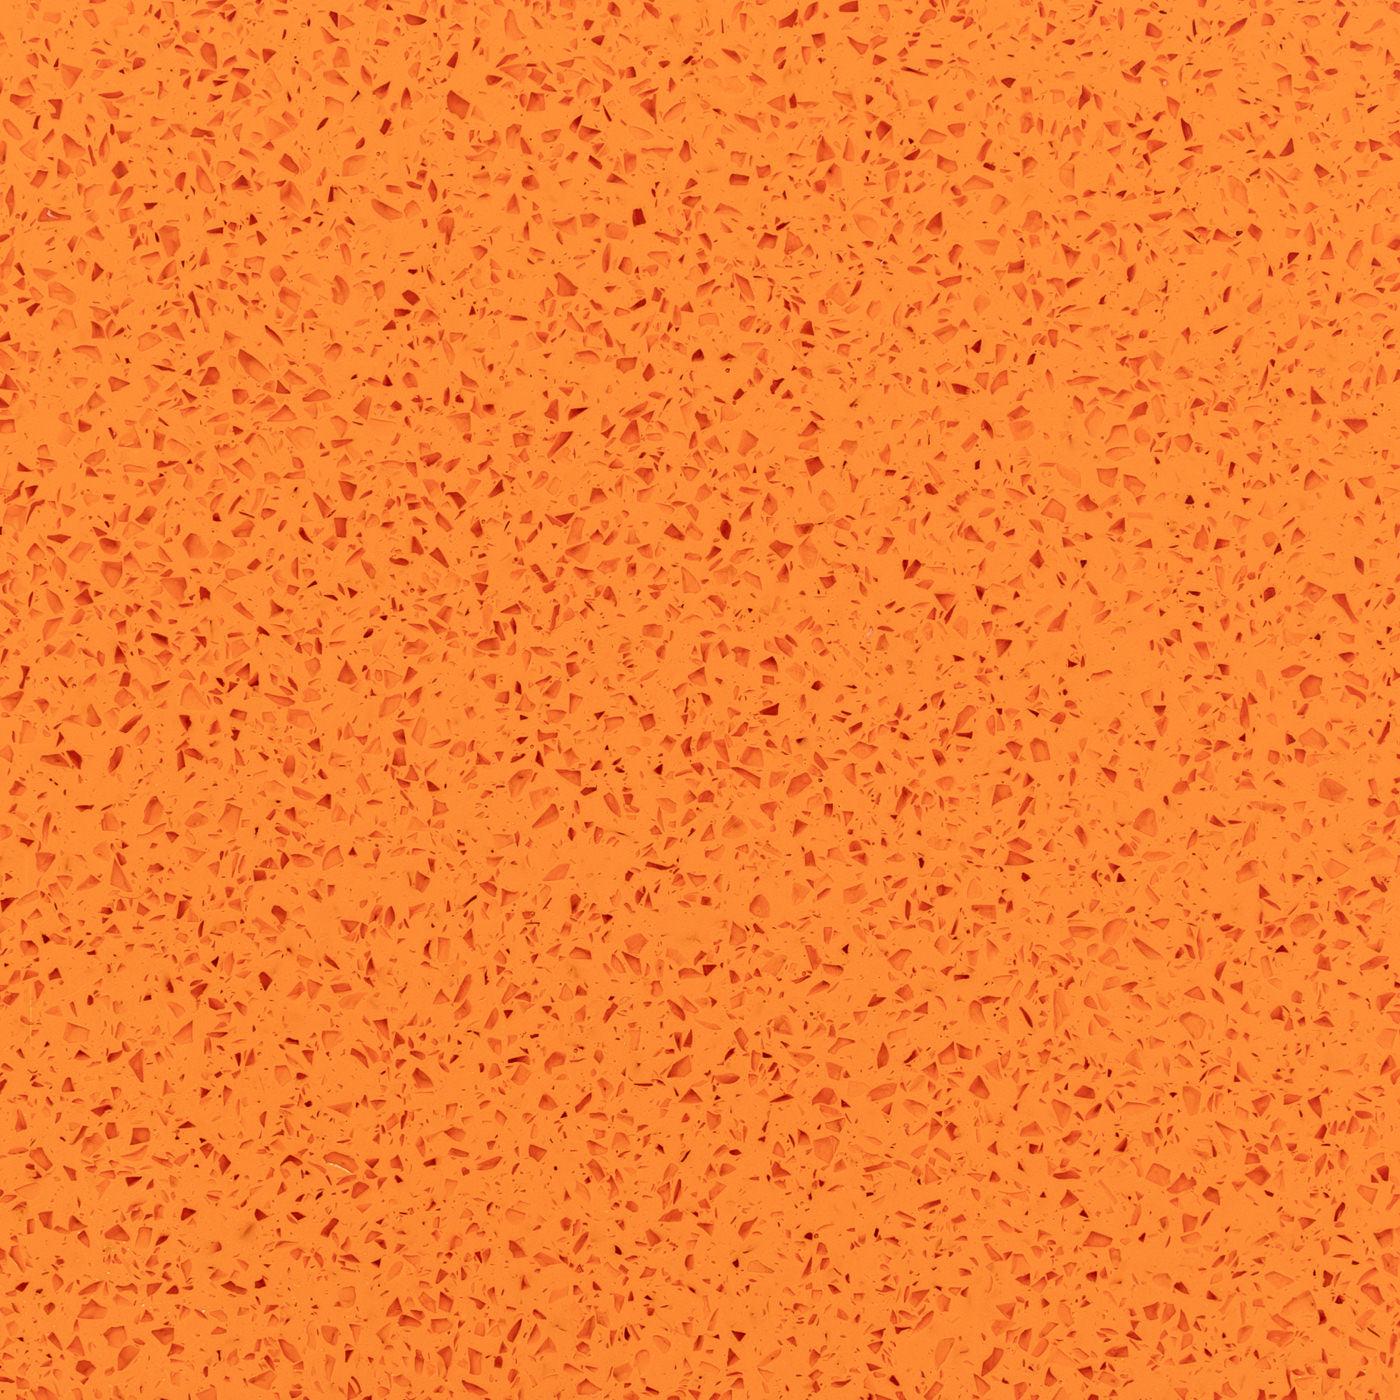 R2008-00 Bright Red Orange